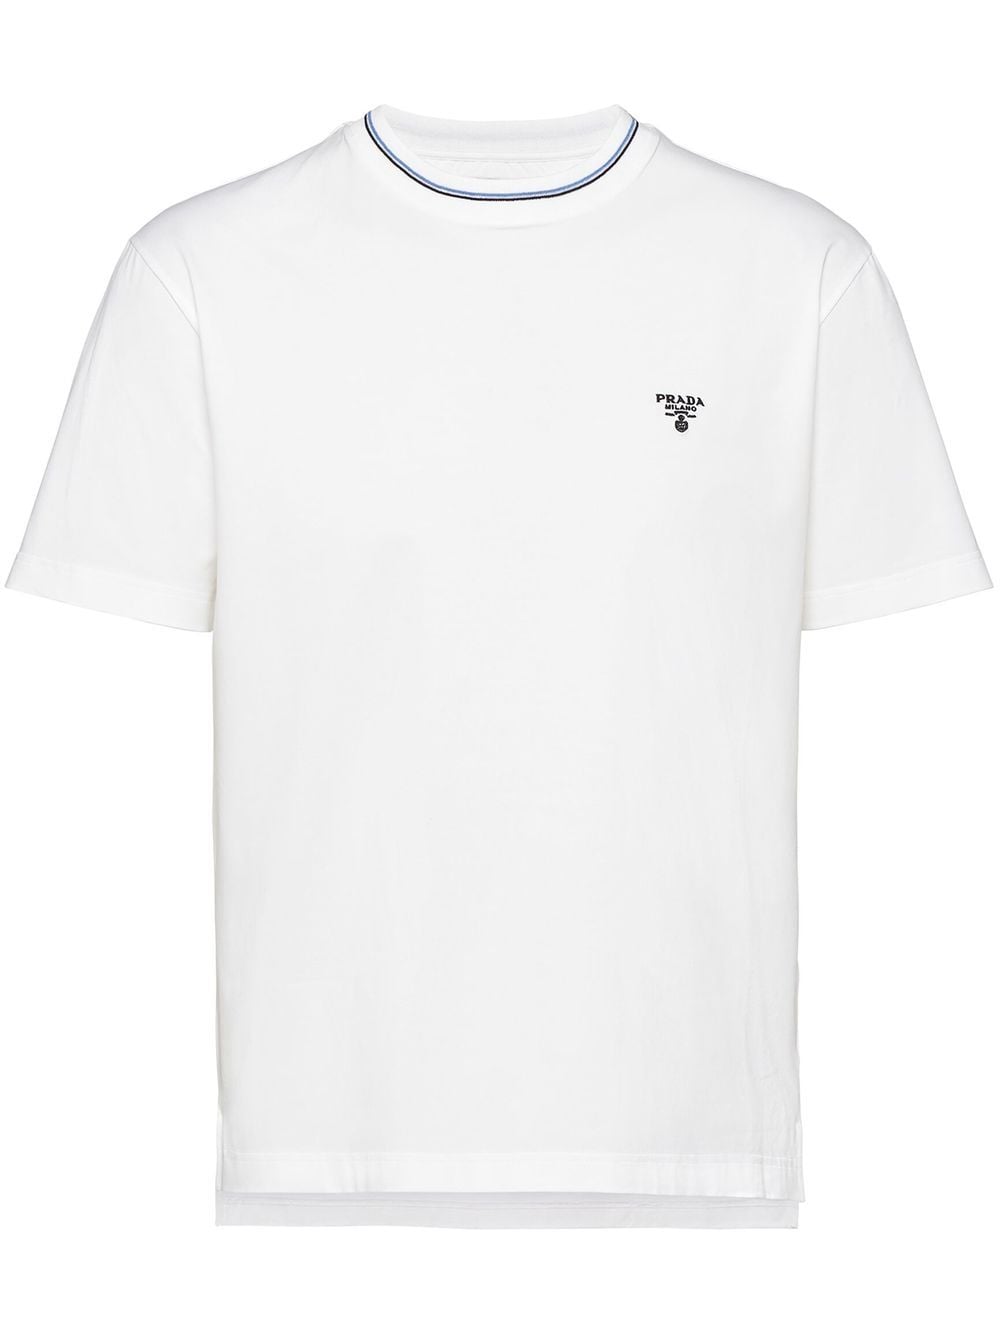 Prada Embroidered Logo T-shirt White/Navy Blue Men's - SS22 - US